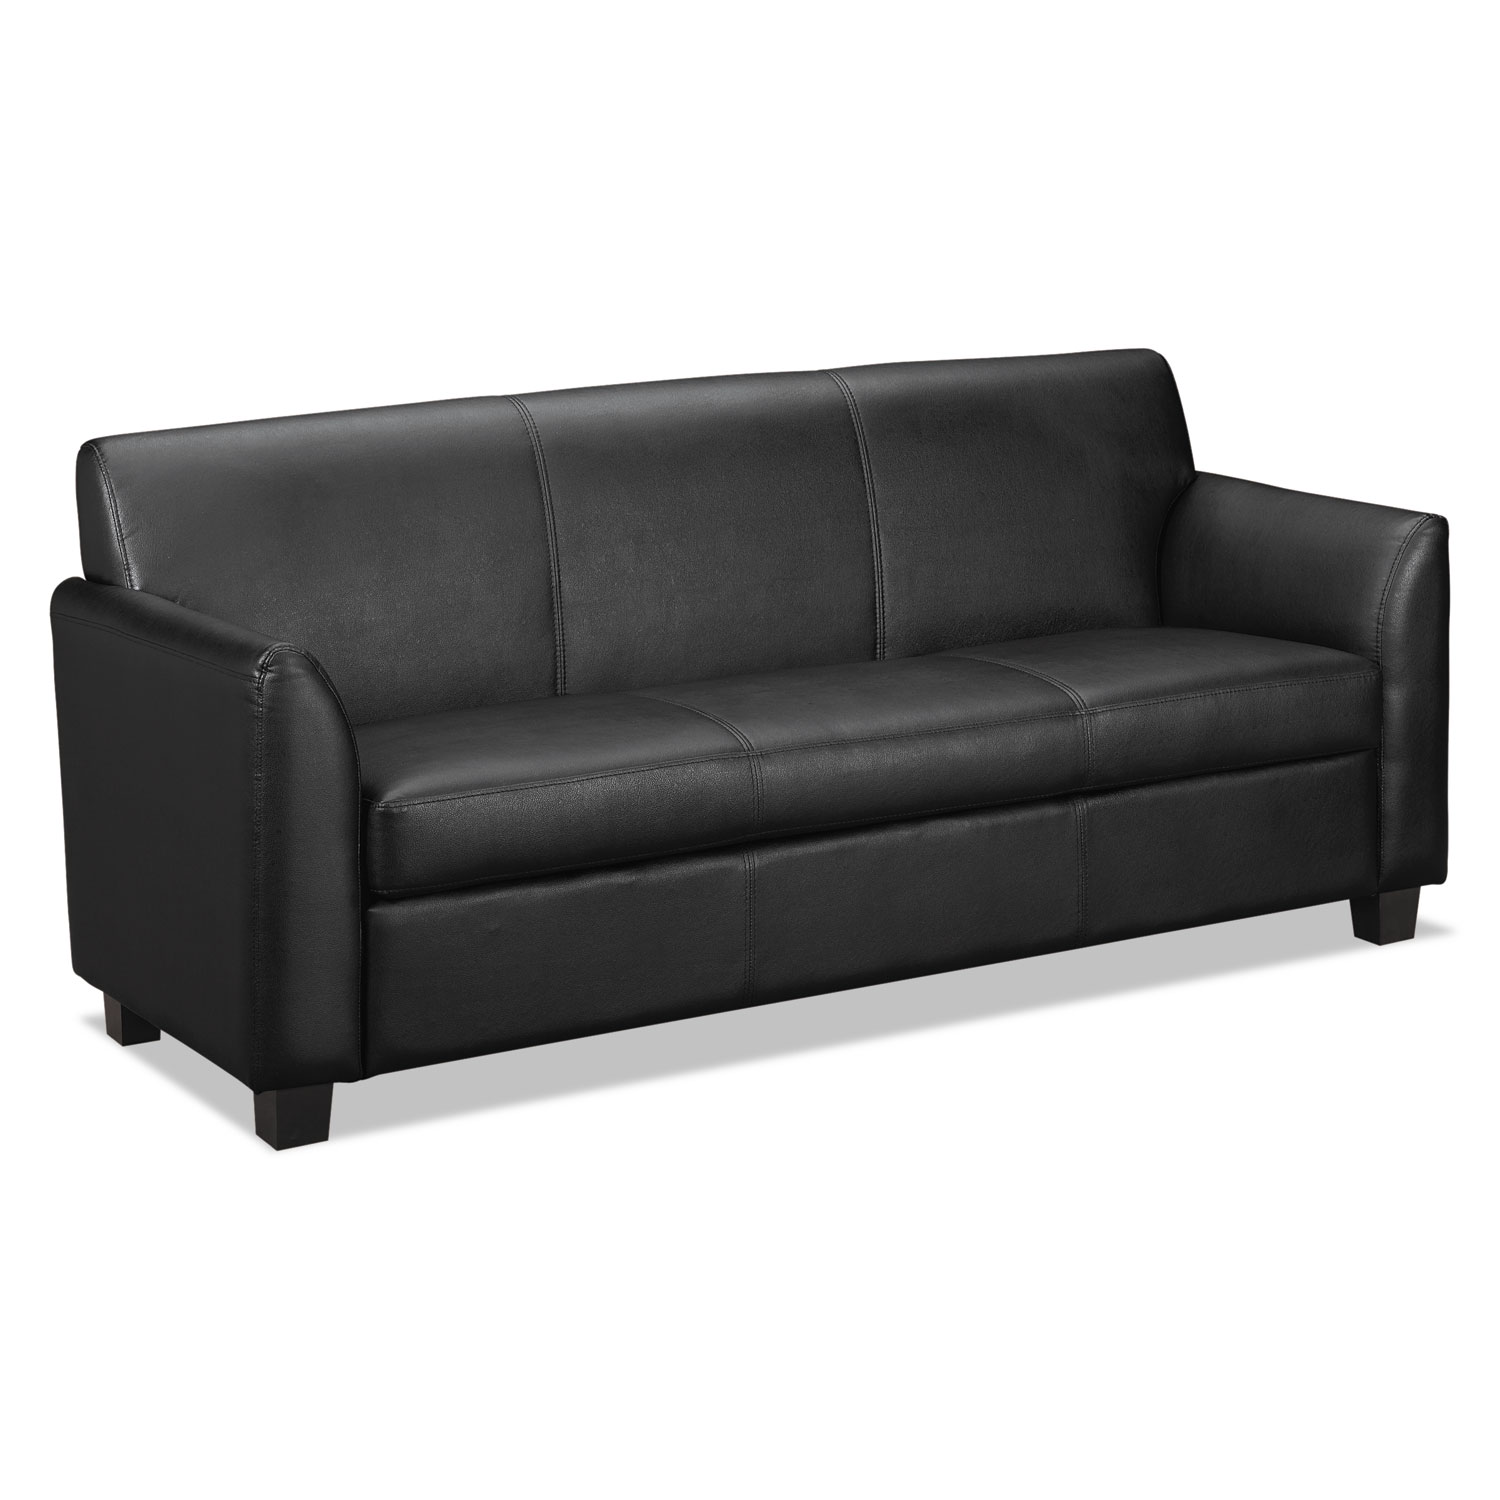 VL870 Series Leather Reception Three-Cushion Sofa, 73w x 28 3/4d x 32h, Black